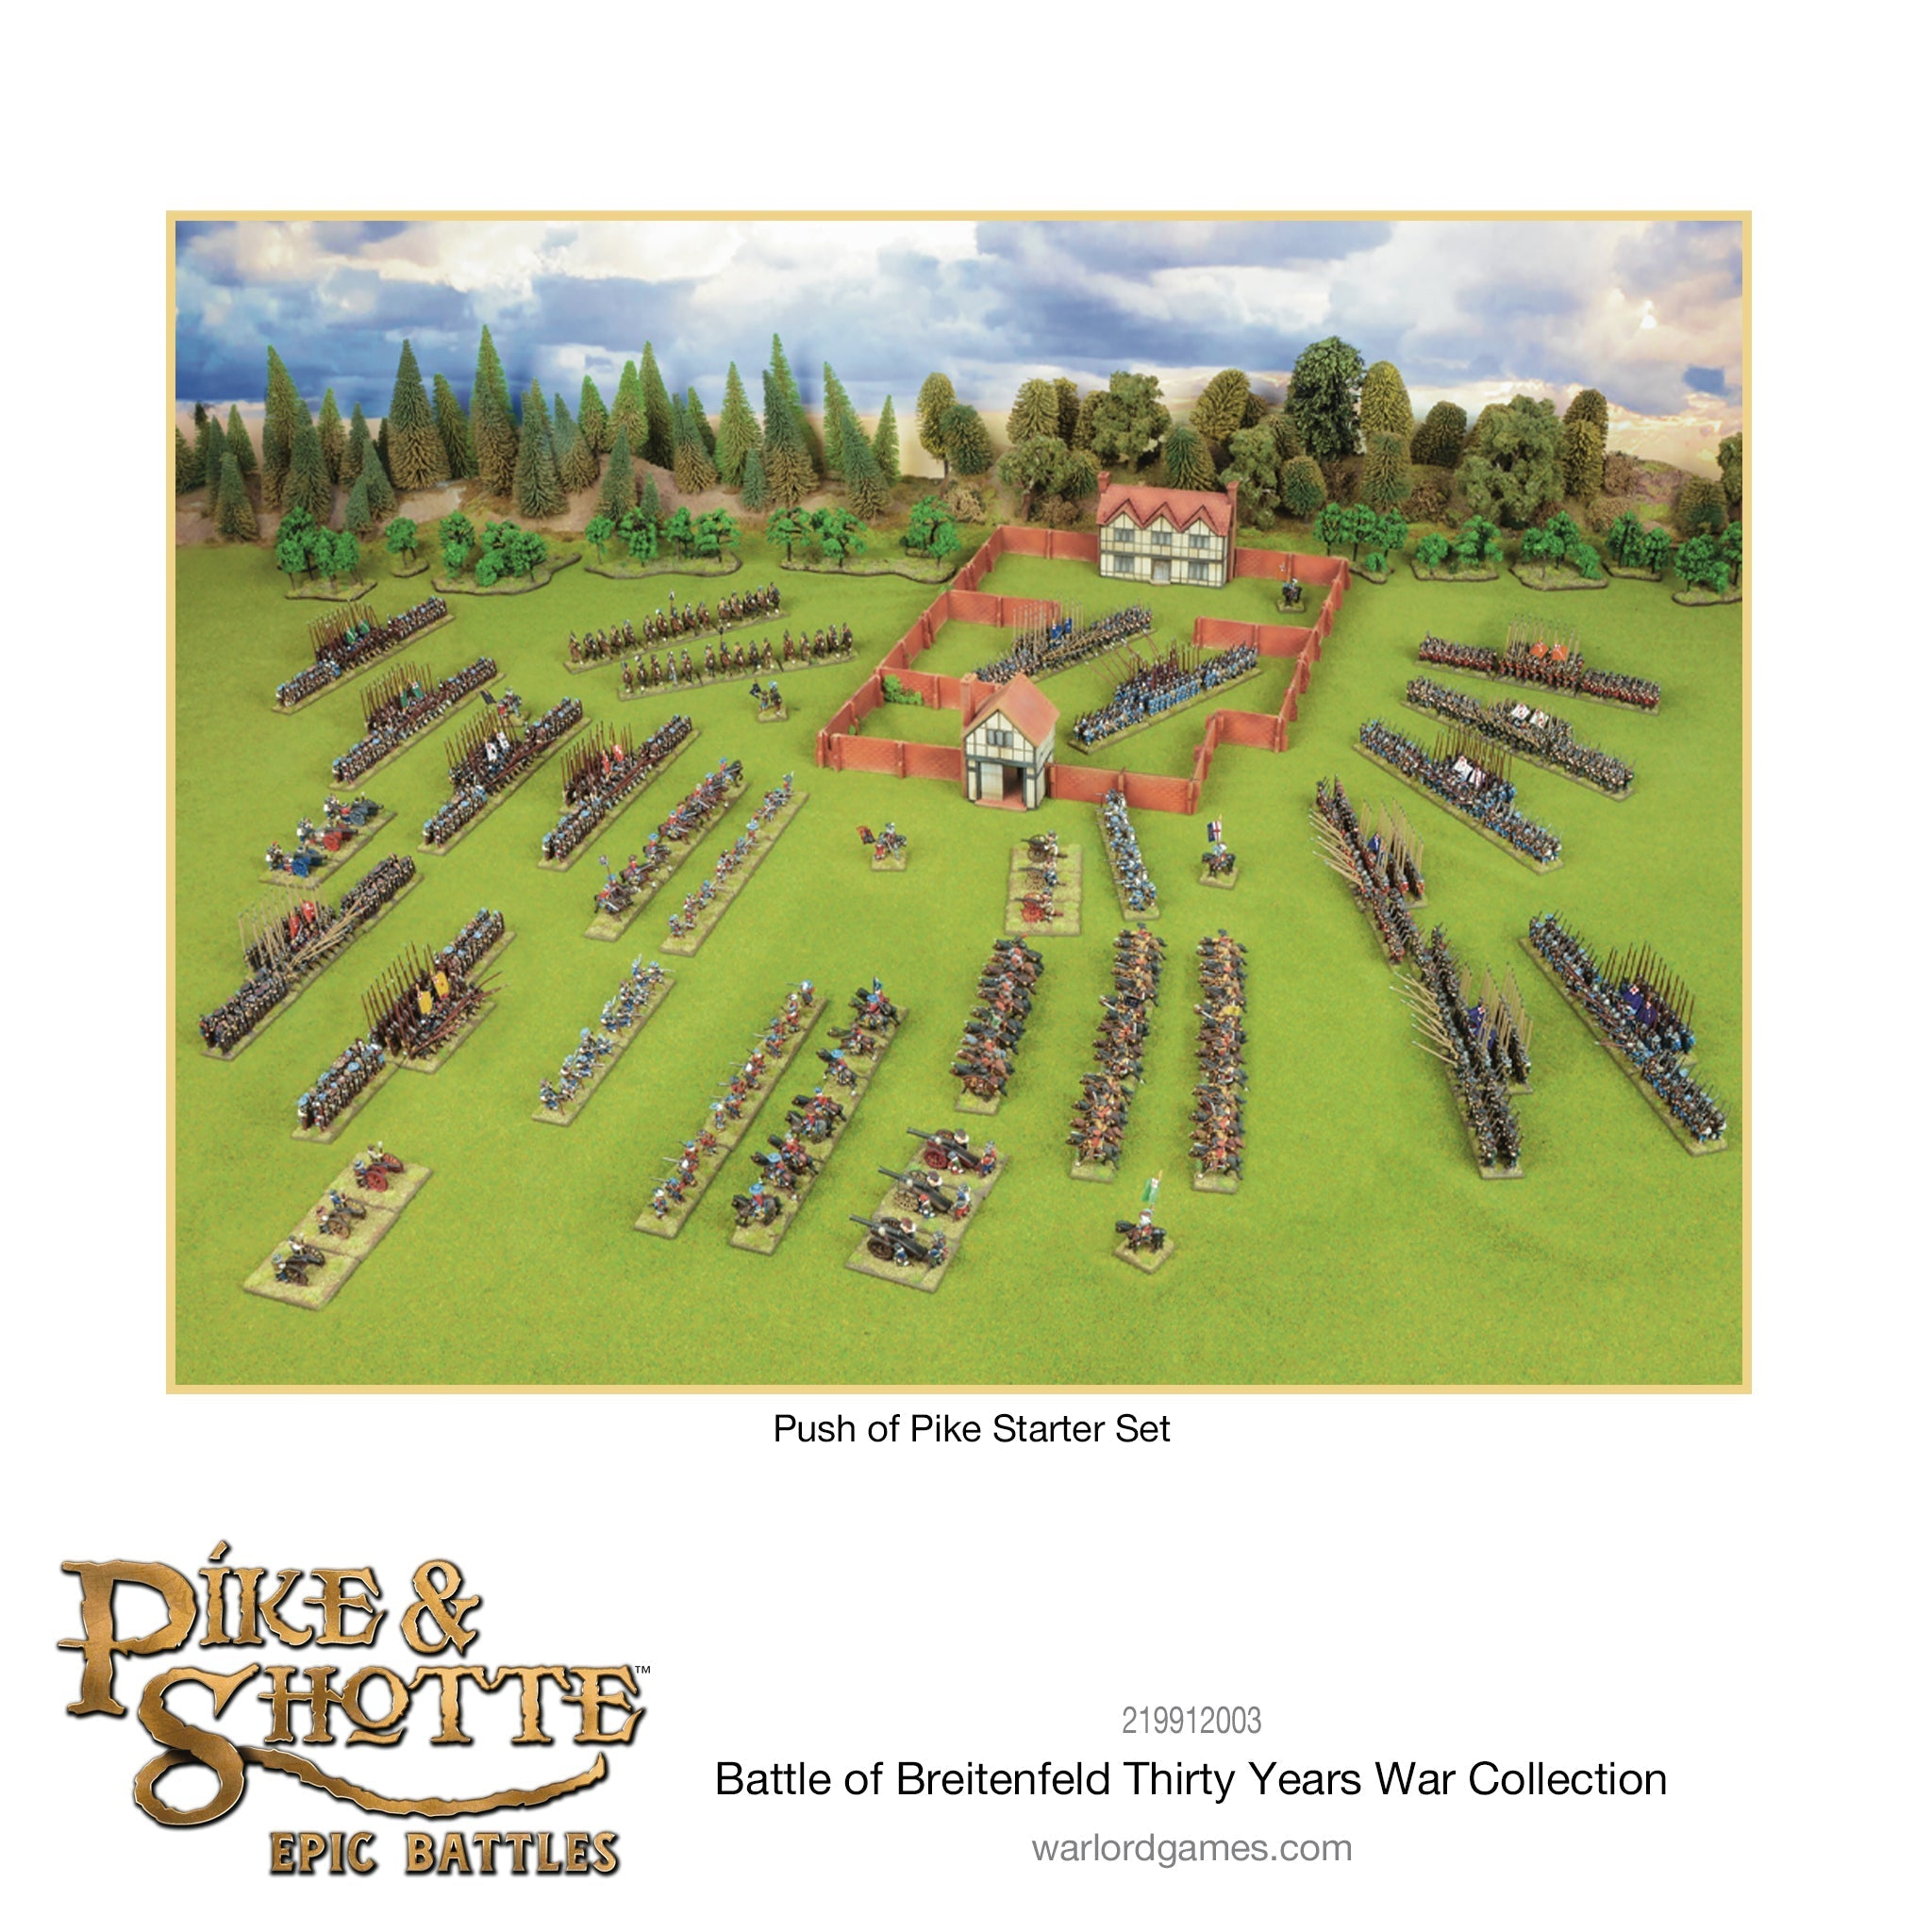 Pike & Shotte Epic Battles - Battle of Breitenfeld Thirty Years' War Collection